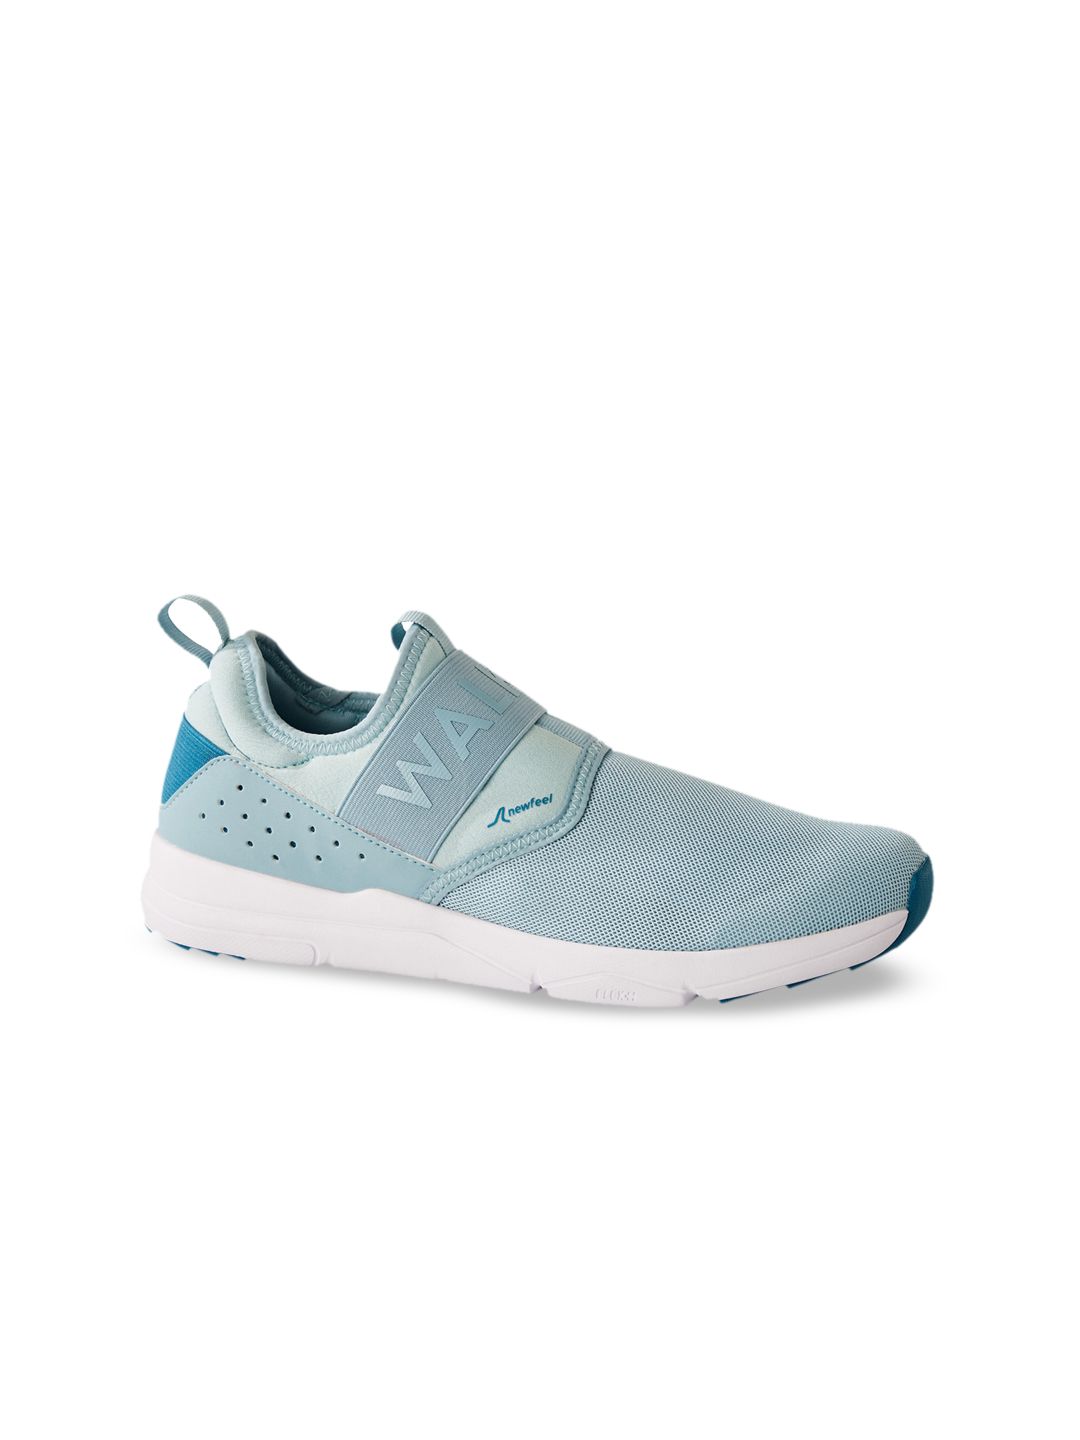 Newfeel By Decathlon Women Blue Slip-On Walking Shoes 8524756 Price in India